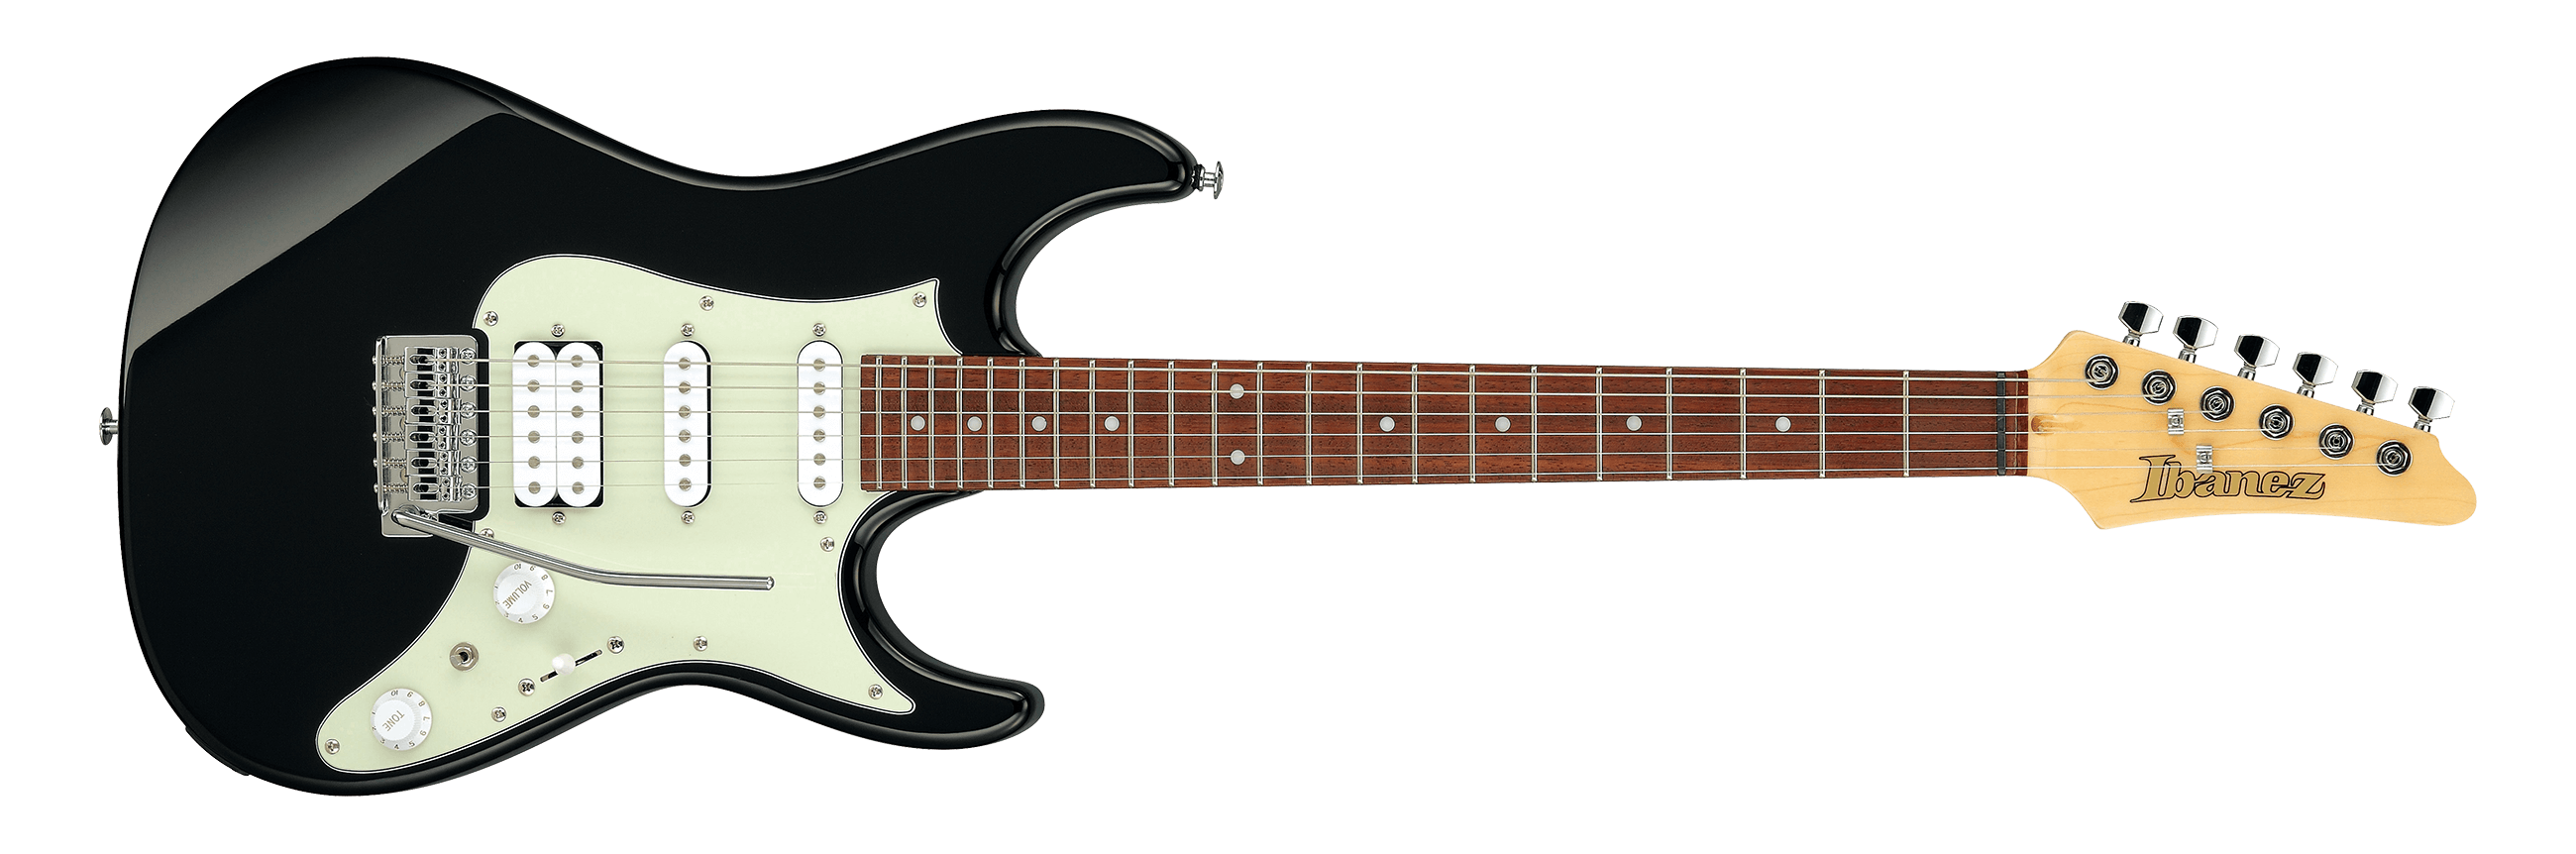 Ibanez AZES40-BK Electric Guitar - Black | Jack's On Queen